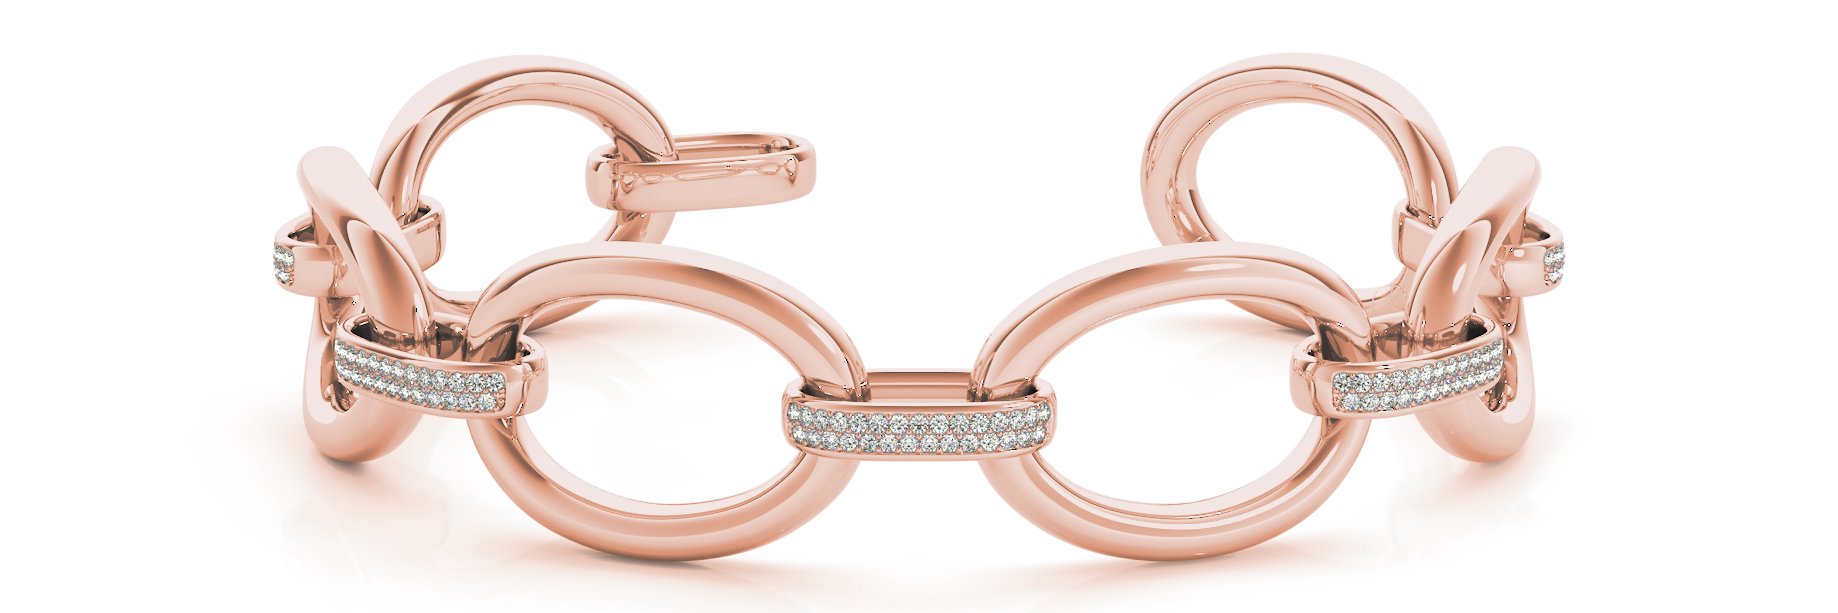 Fancy Diamond Bracelet Ladies 1.58ct tw - 14kt Rose Gold